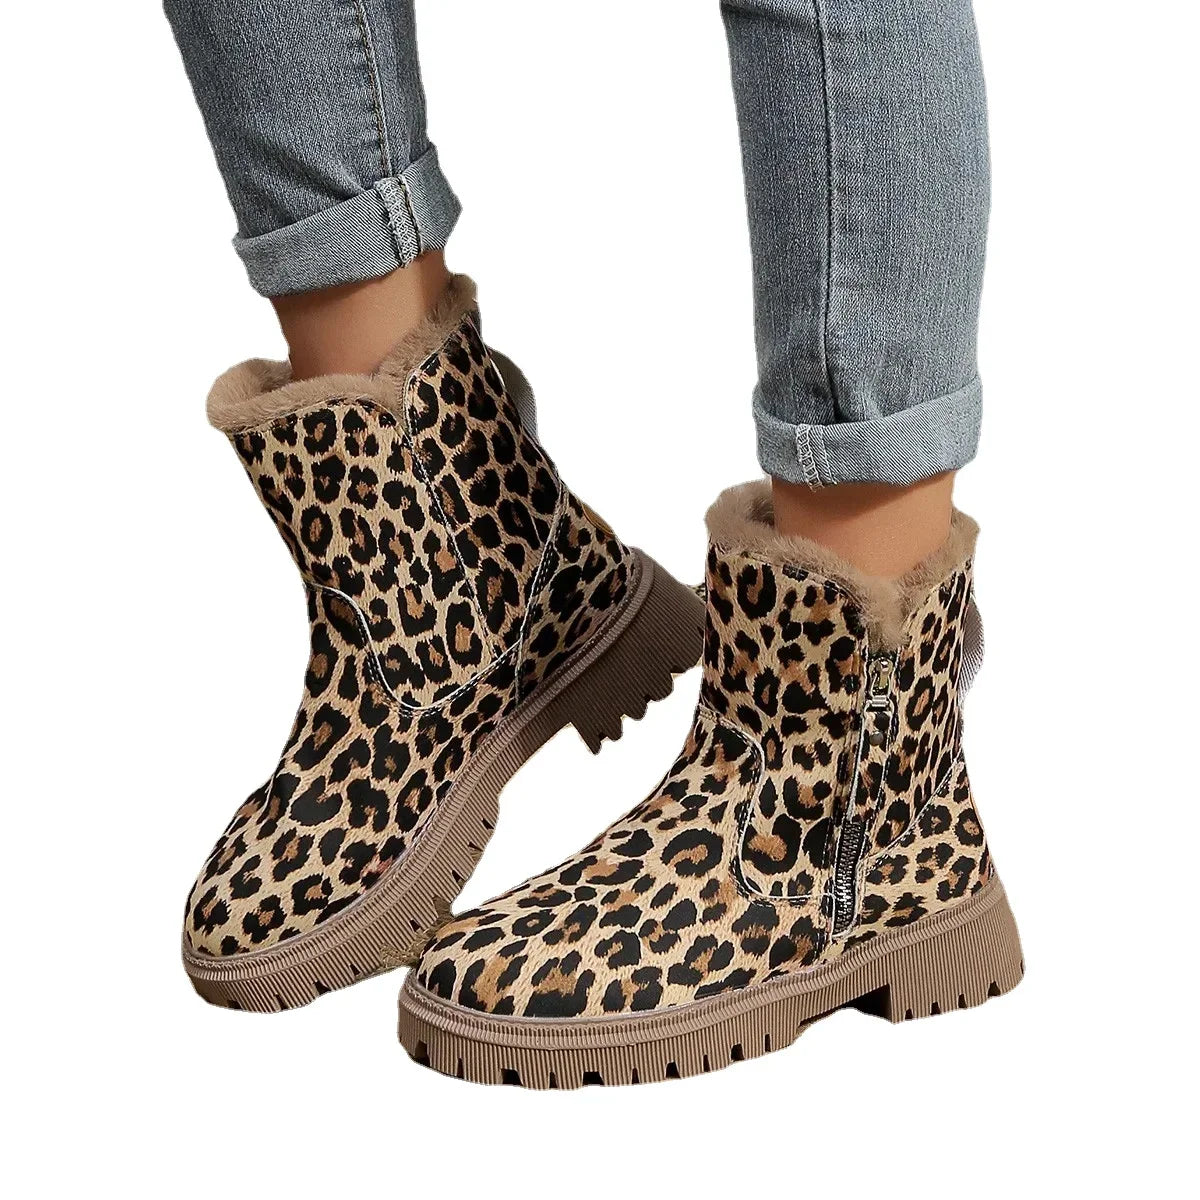 Chicdear - New Women's Winter Warm Snow Boots Non-slip Cotton Shoes Side Zipper Women's Platform Ankle Boots Leopard Warm Boots Botas Mujer